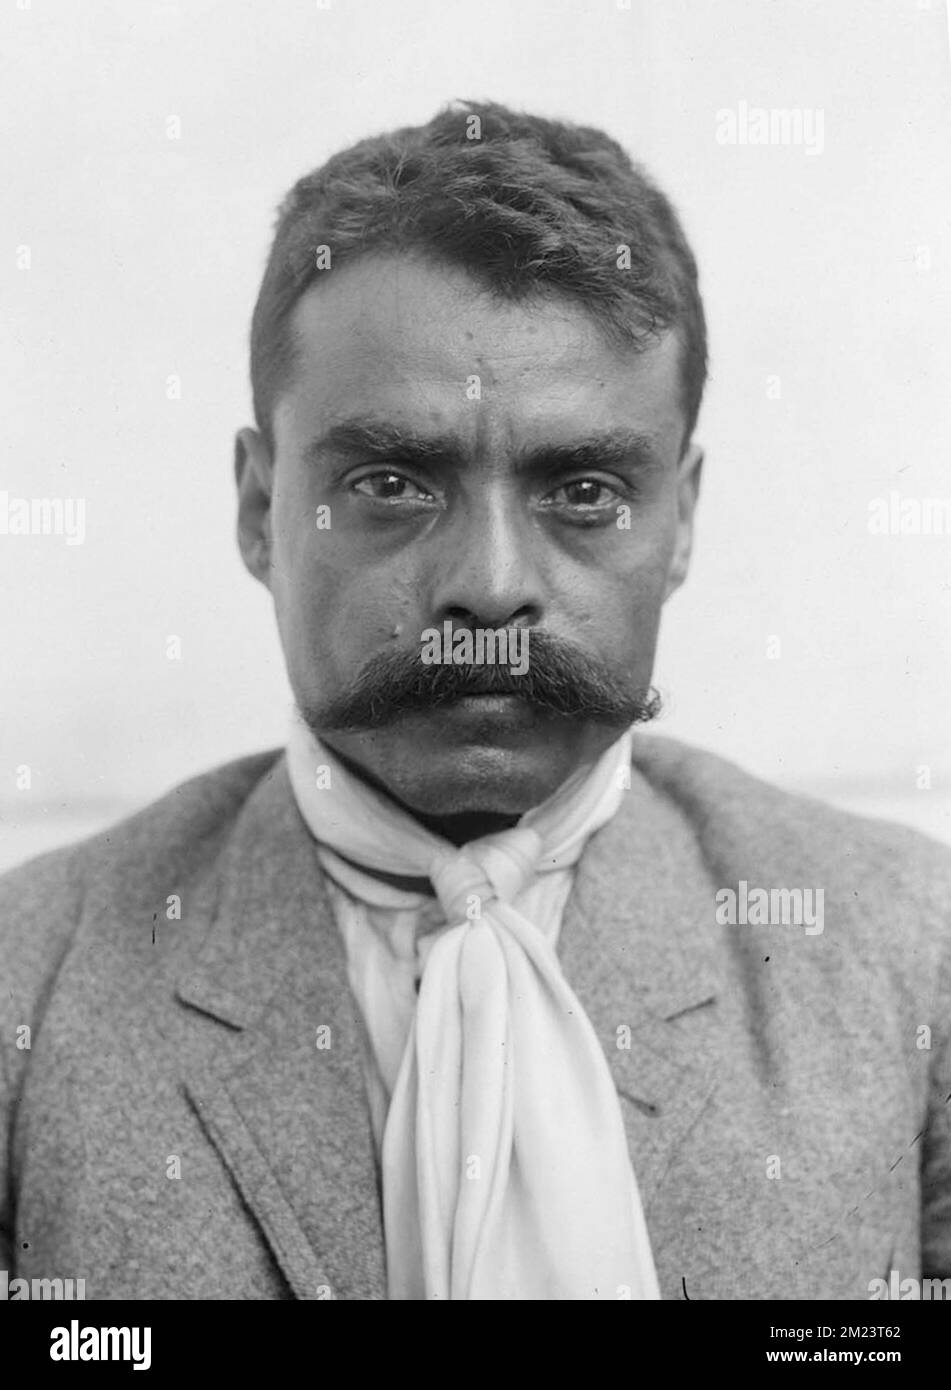 Emiliano Zapata Salazar (1879-1919), mexikanischer Revolutionär. Emiliano Zapata Salazar (1879-1919), Führer der mexikanischen Revolution Stockfoto